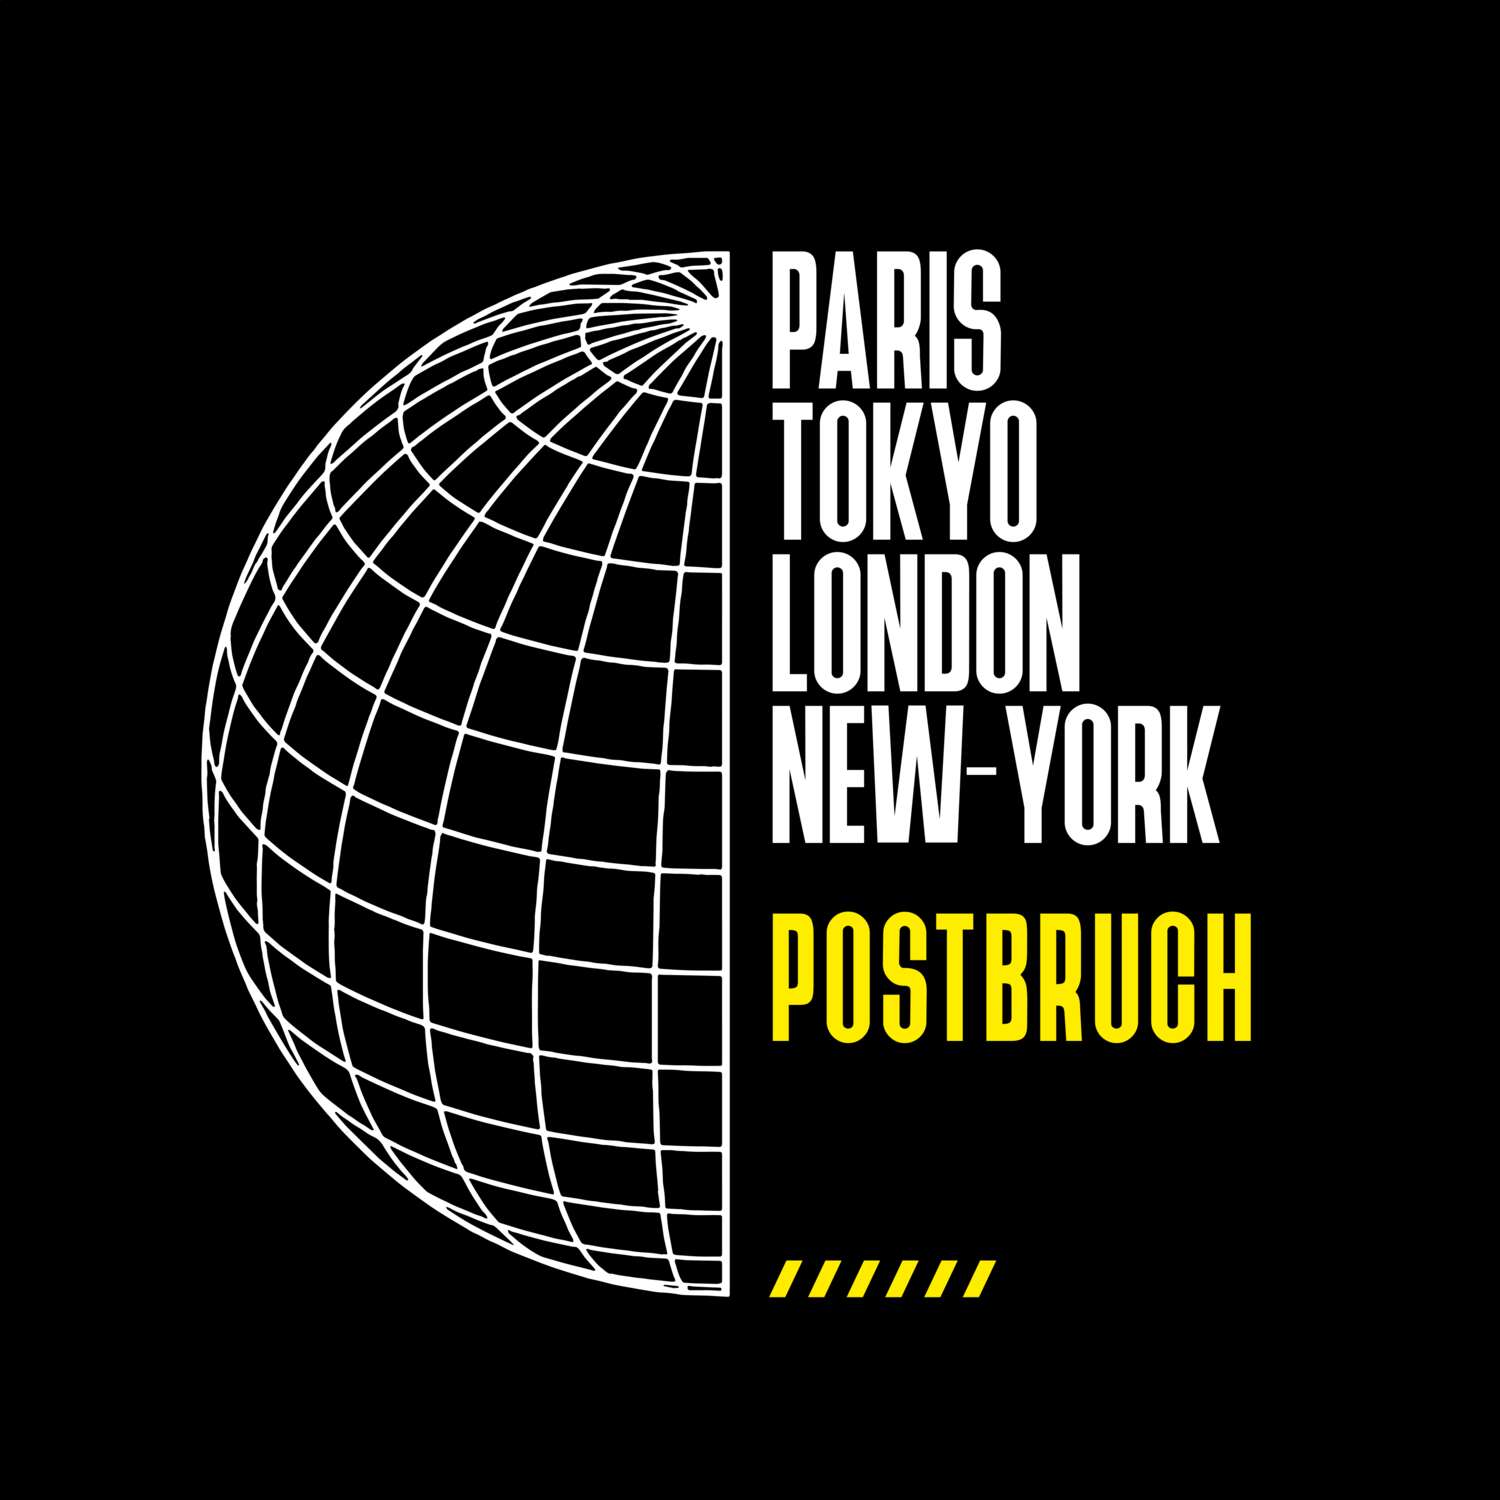 Postbruch T-Shirt »Paris Tokyo London«